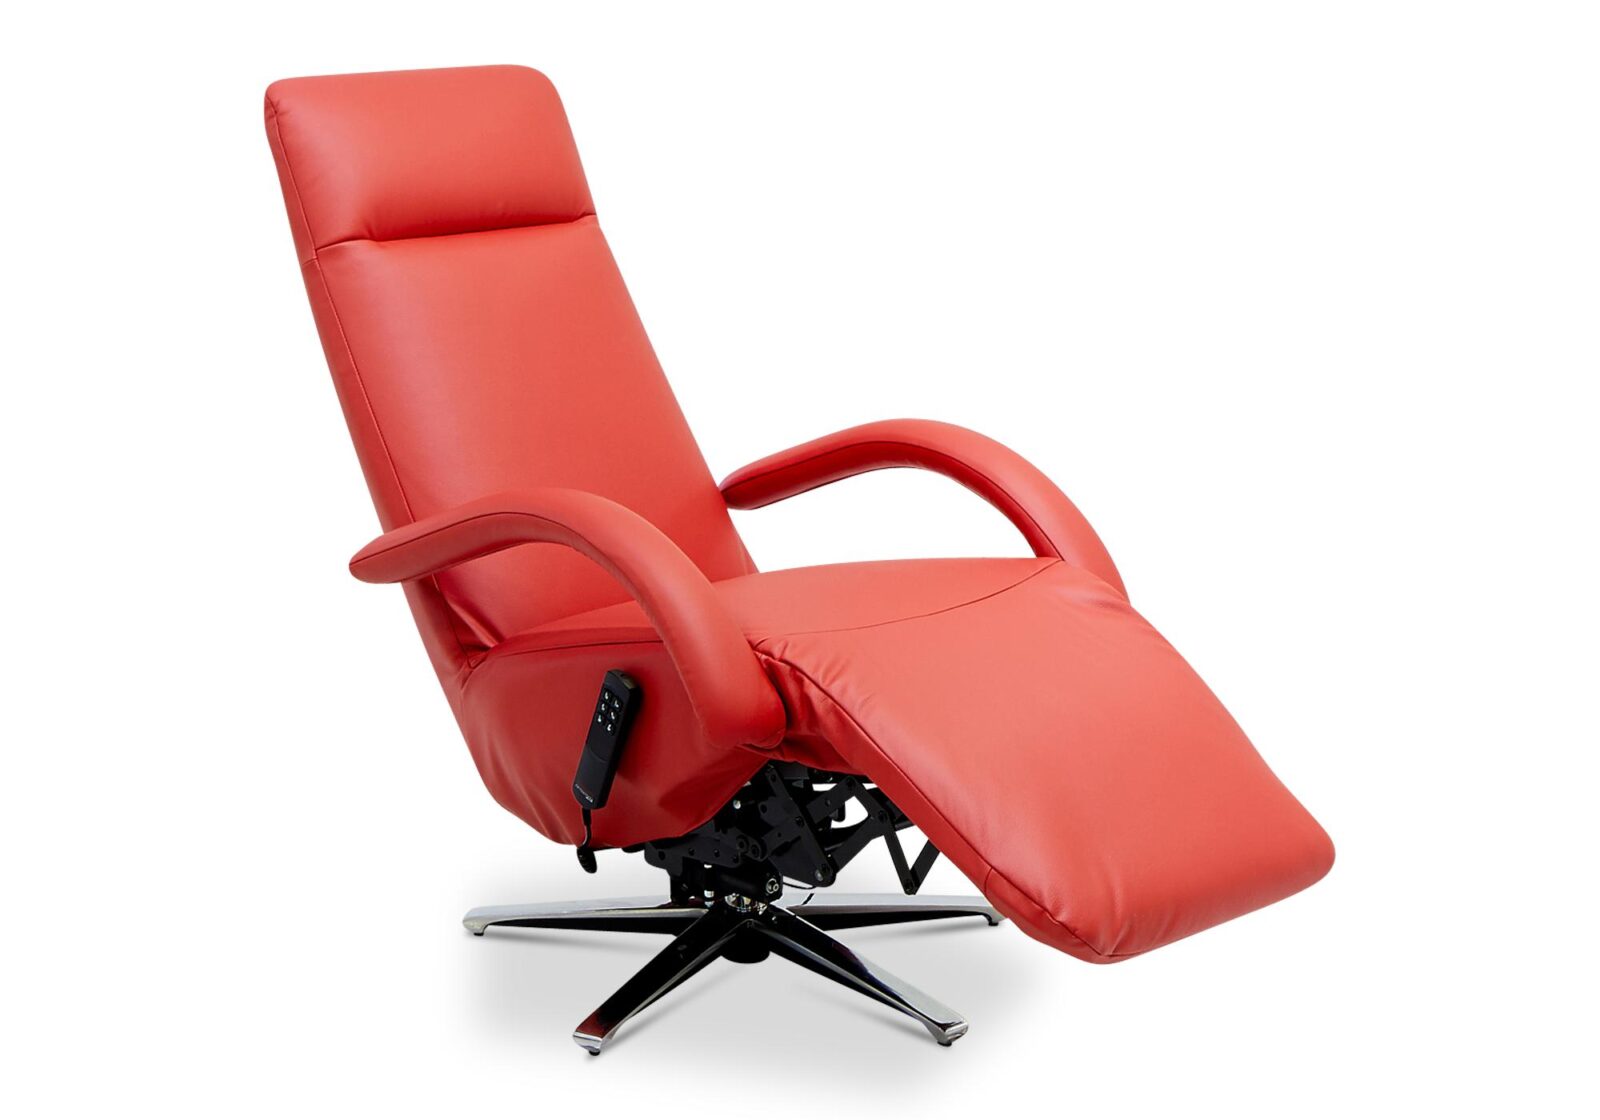 TV-Sessel Simba Strässle. Bezug: Leder. Farbe: Rot. Erhältlich bei Möbel Gallati.